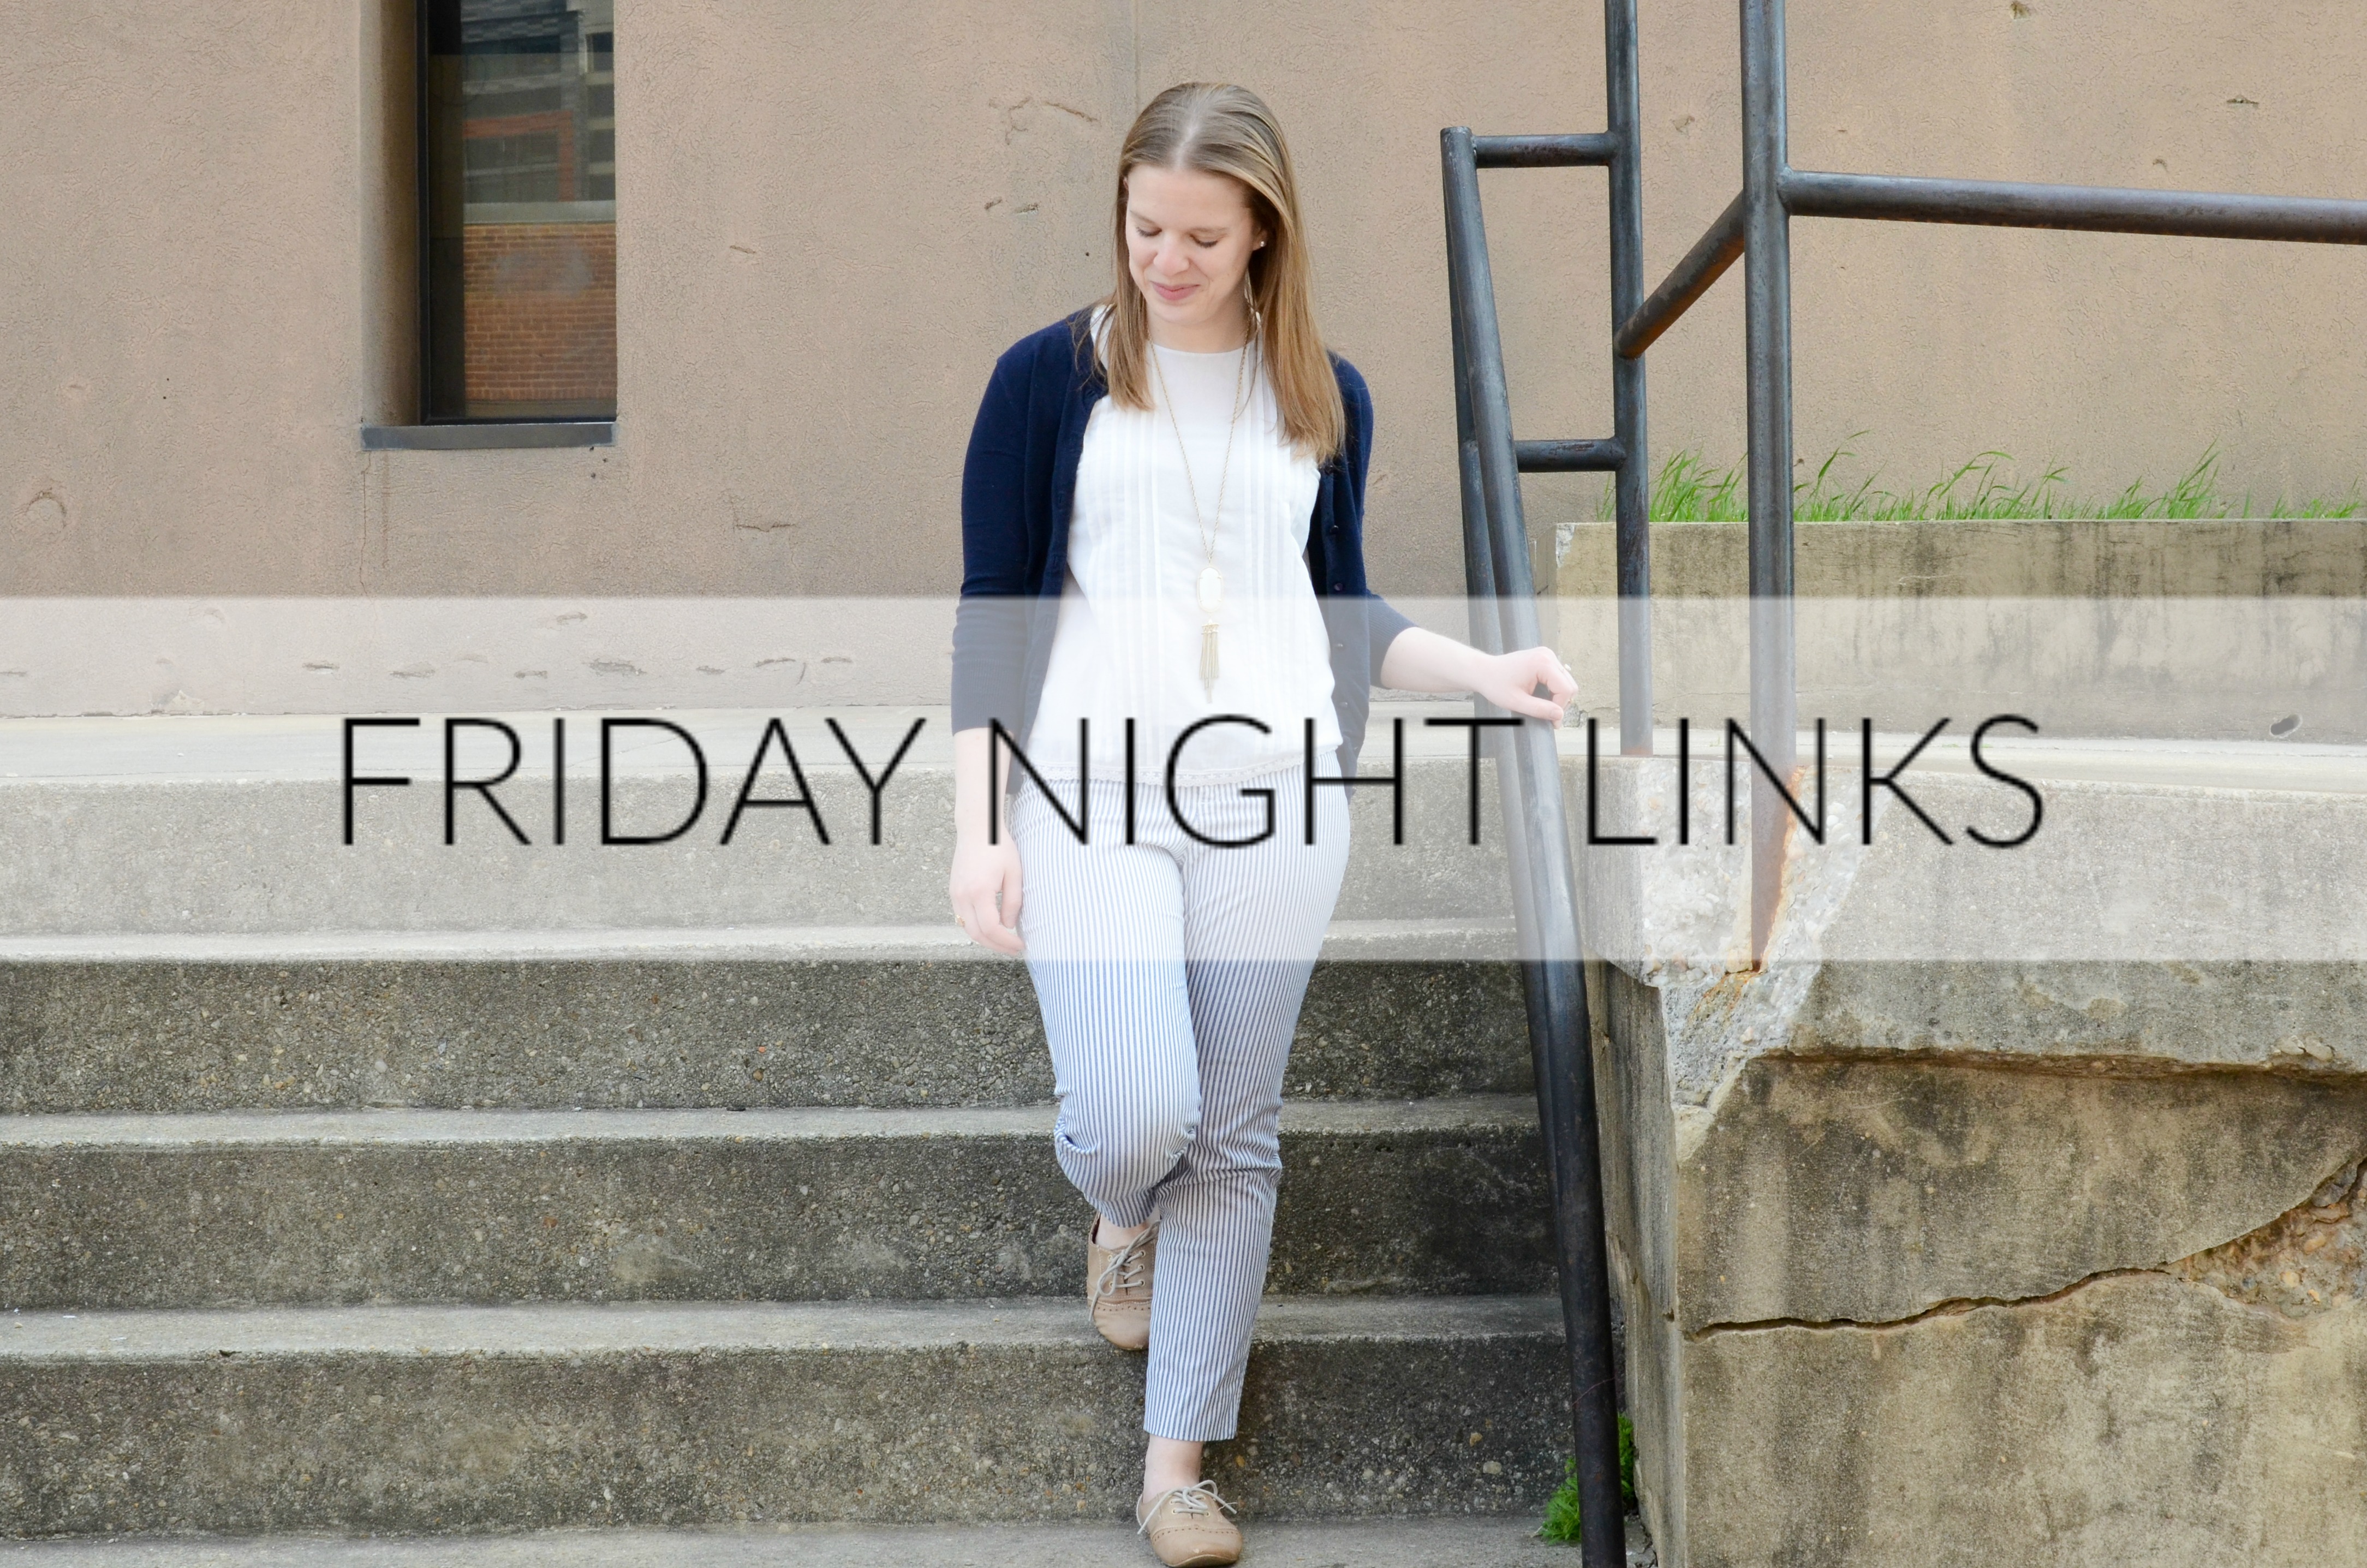 Friday Night Links | Something Good